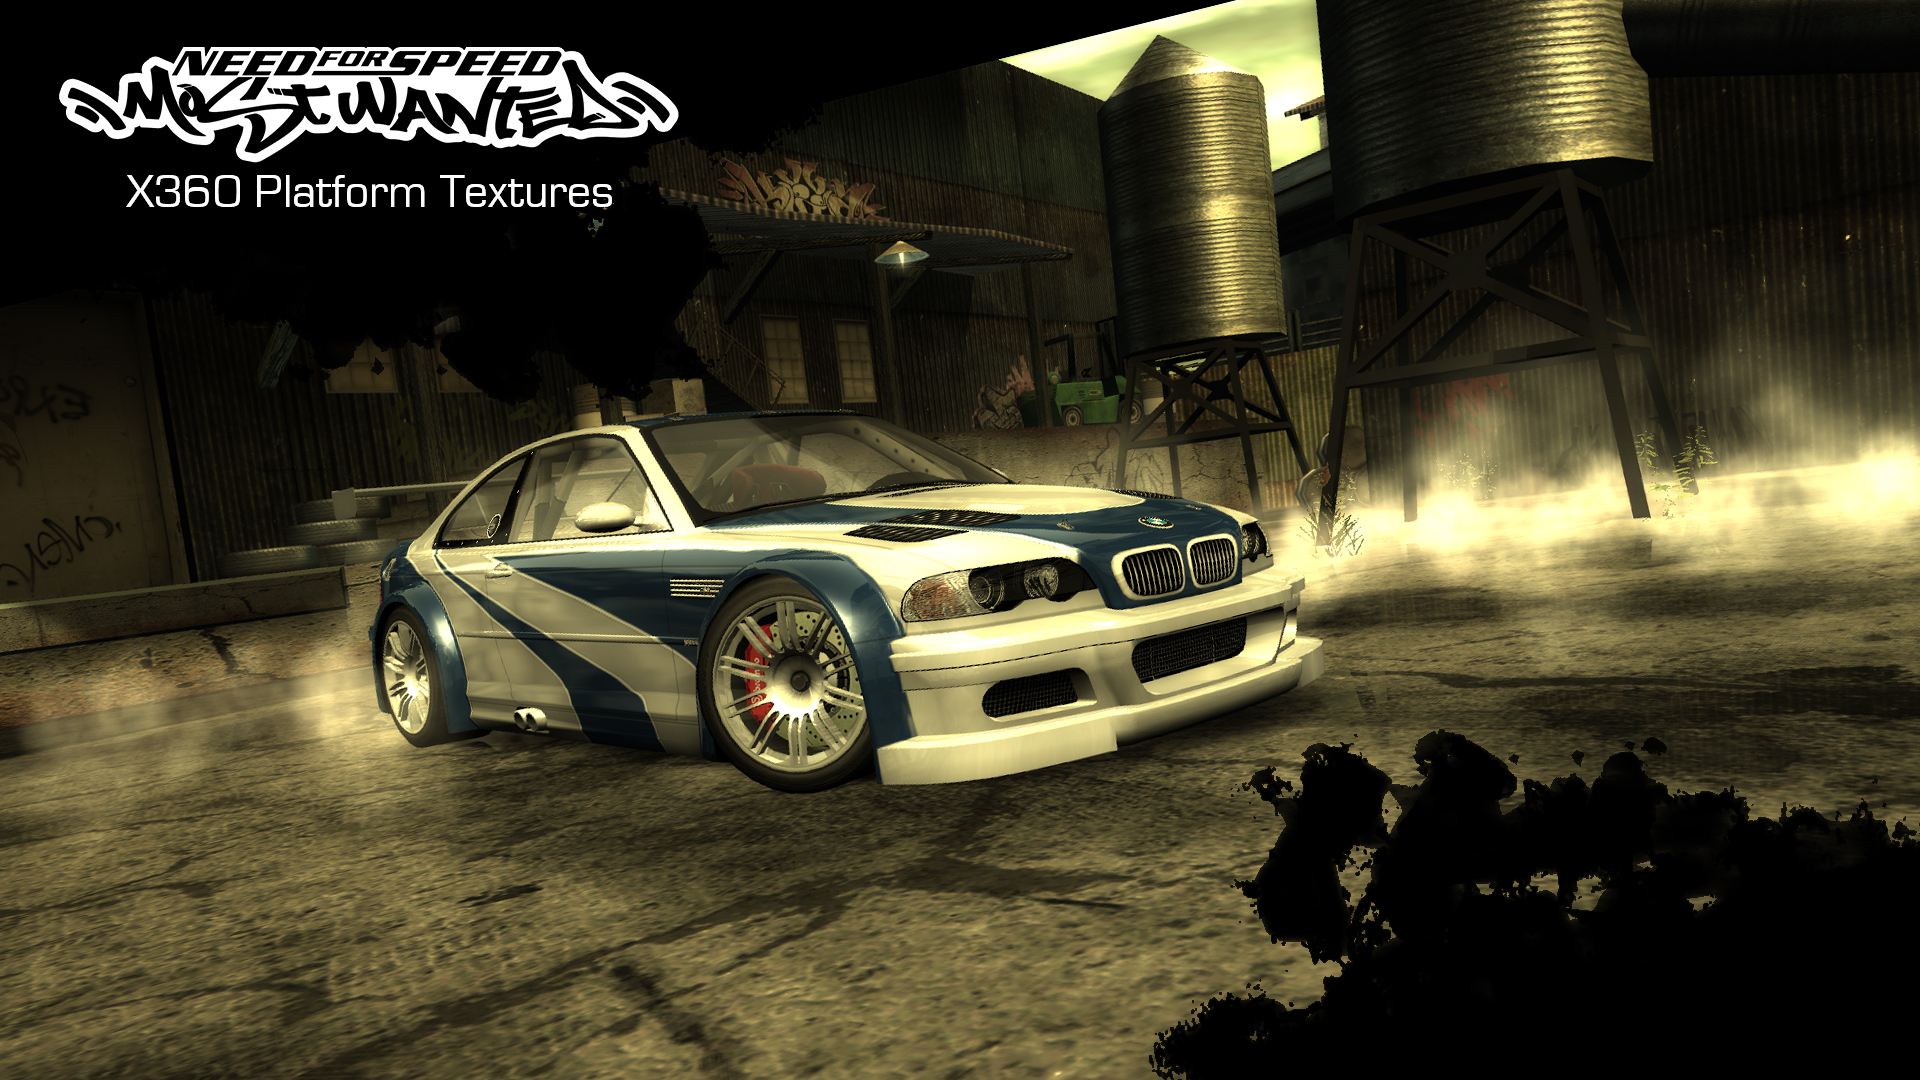 Nfsmw X360 Platform Textures - Nfsmw Xbox 360 , HD Wallpaper & Backgrounds